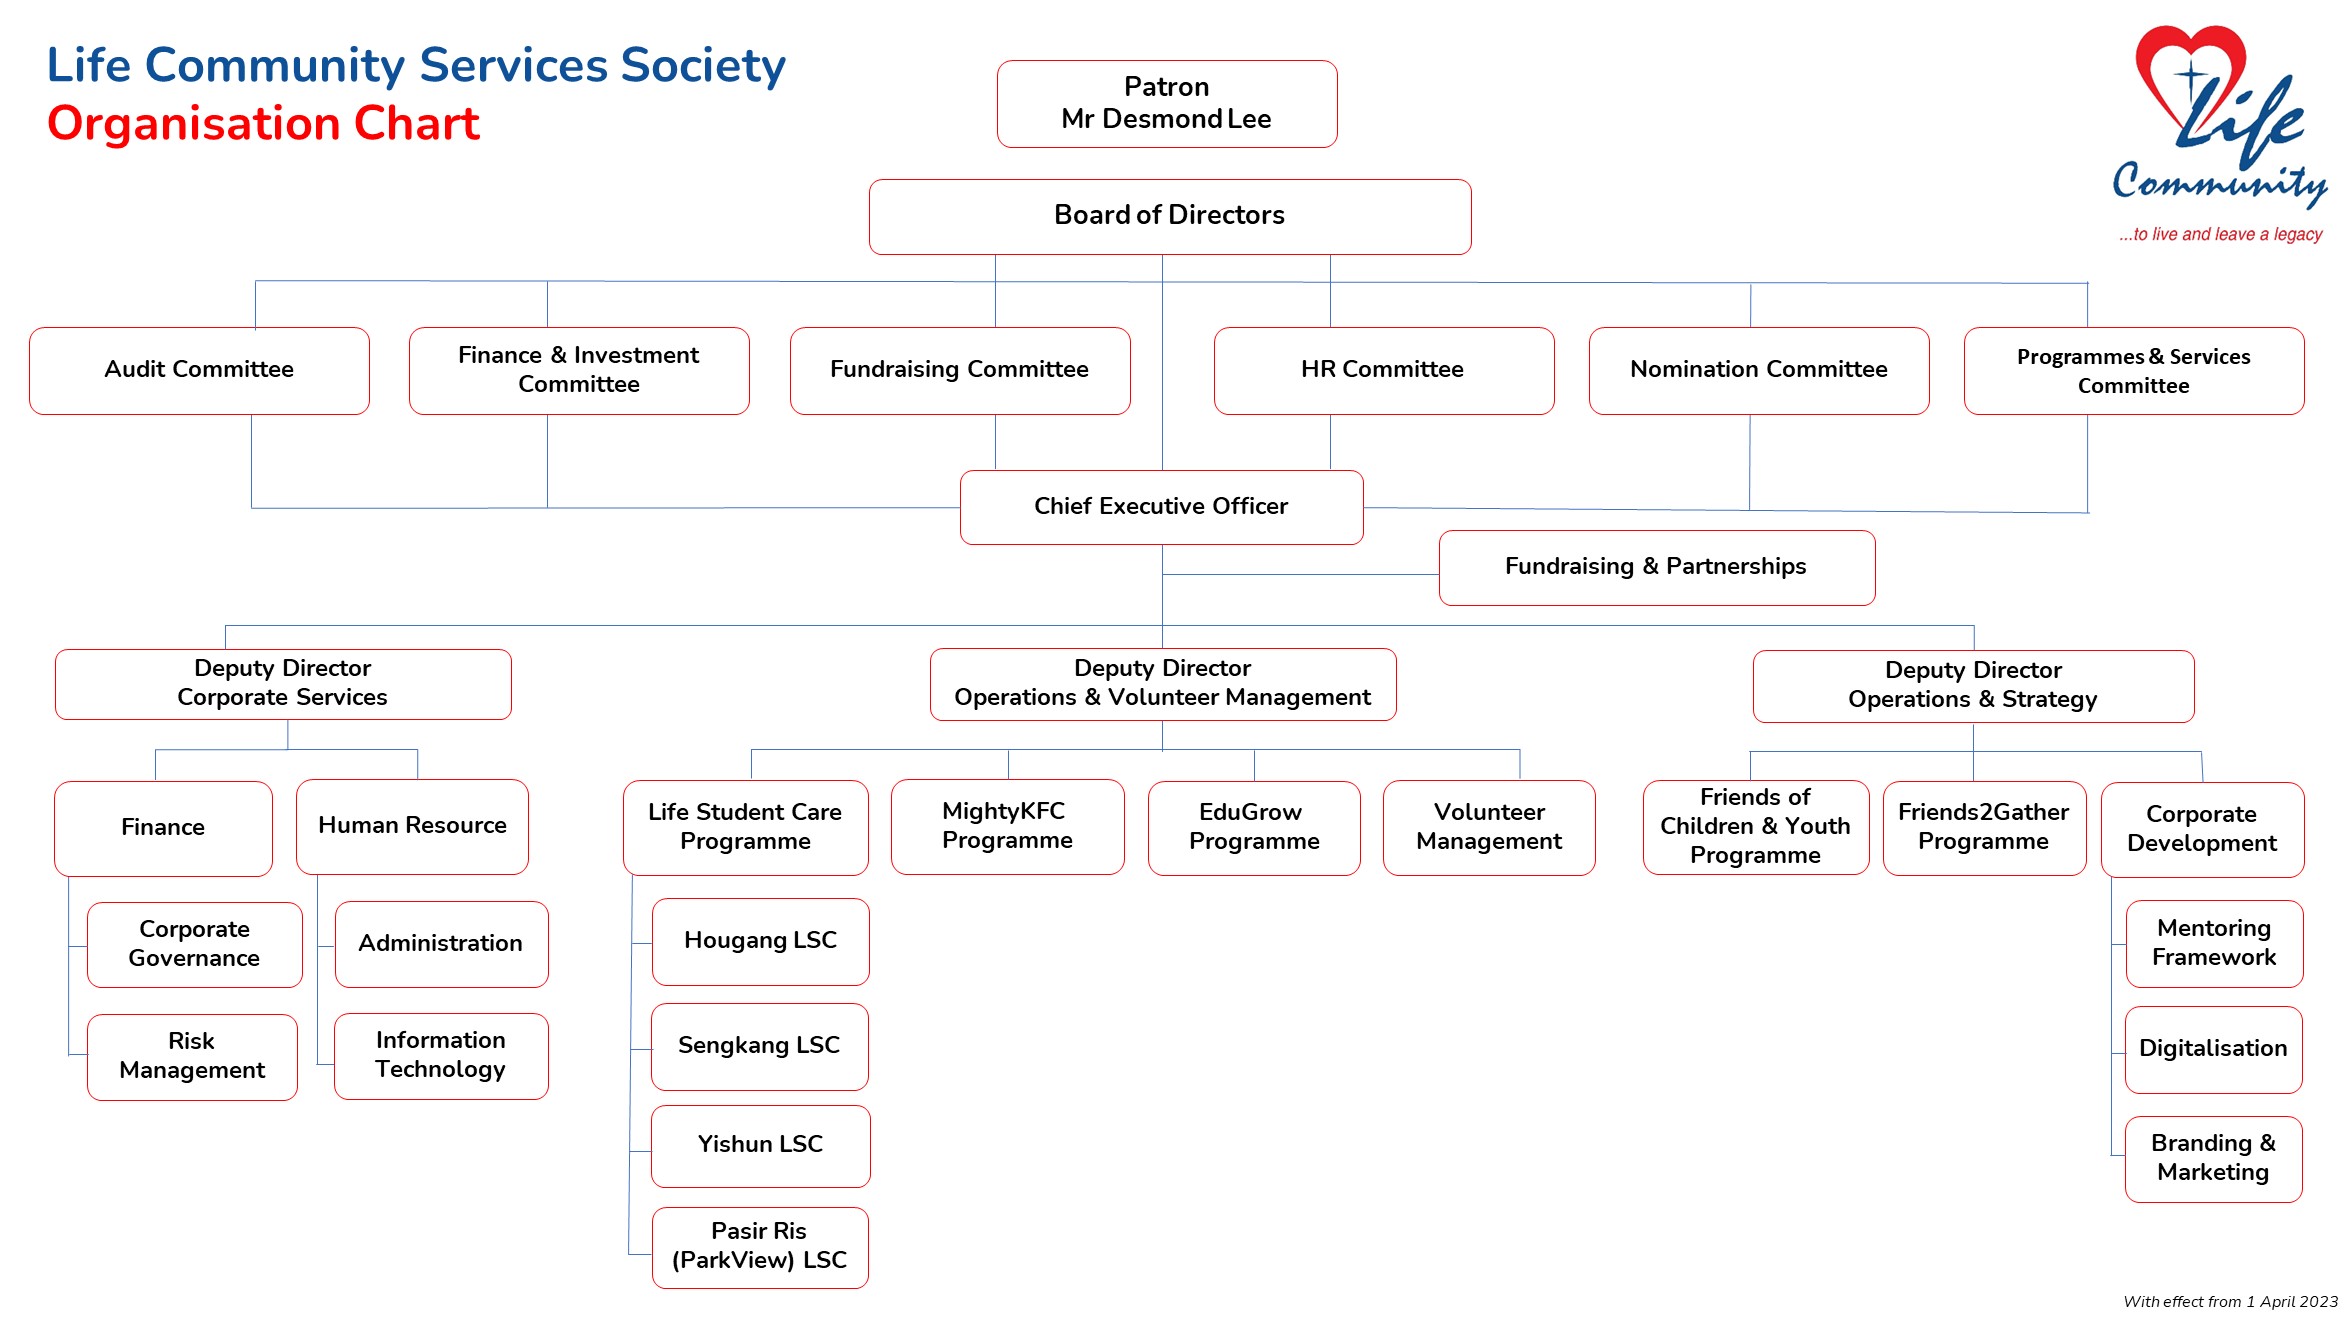 LCSS Organisation Chart_1 April 2023